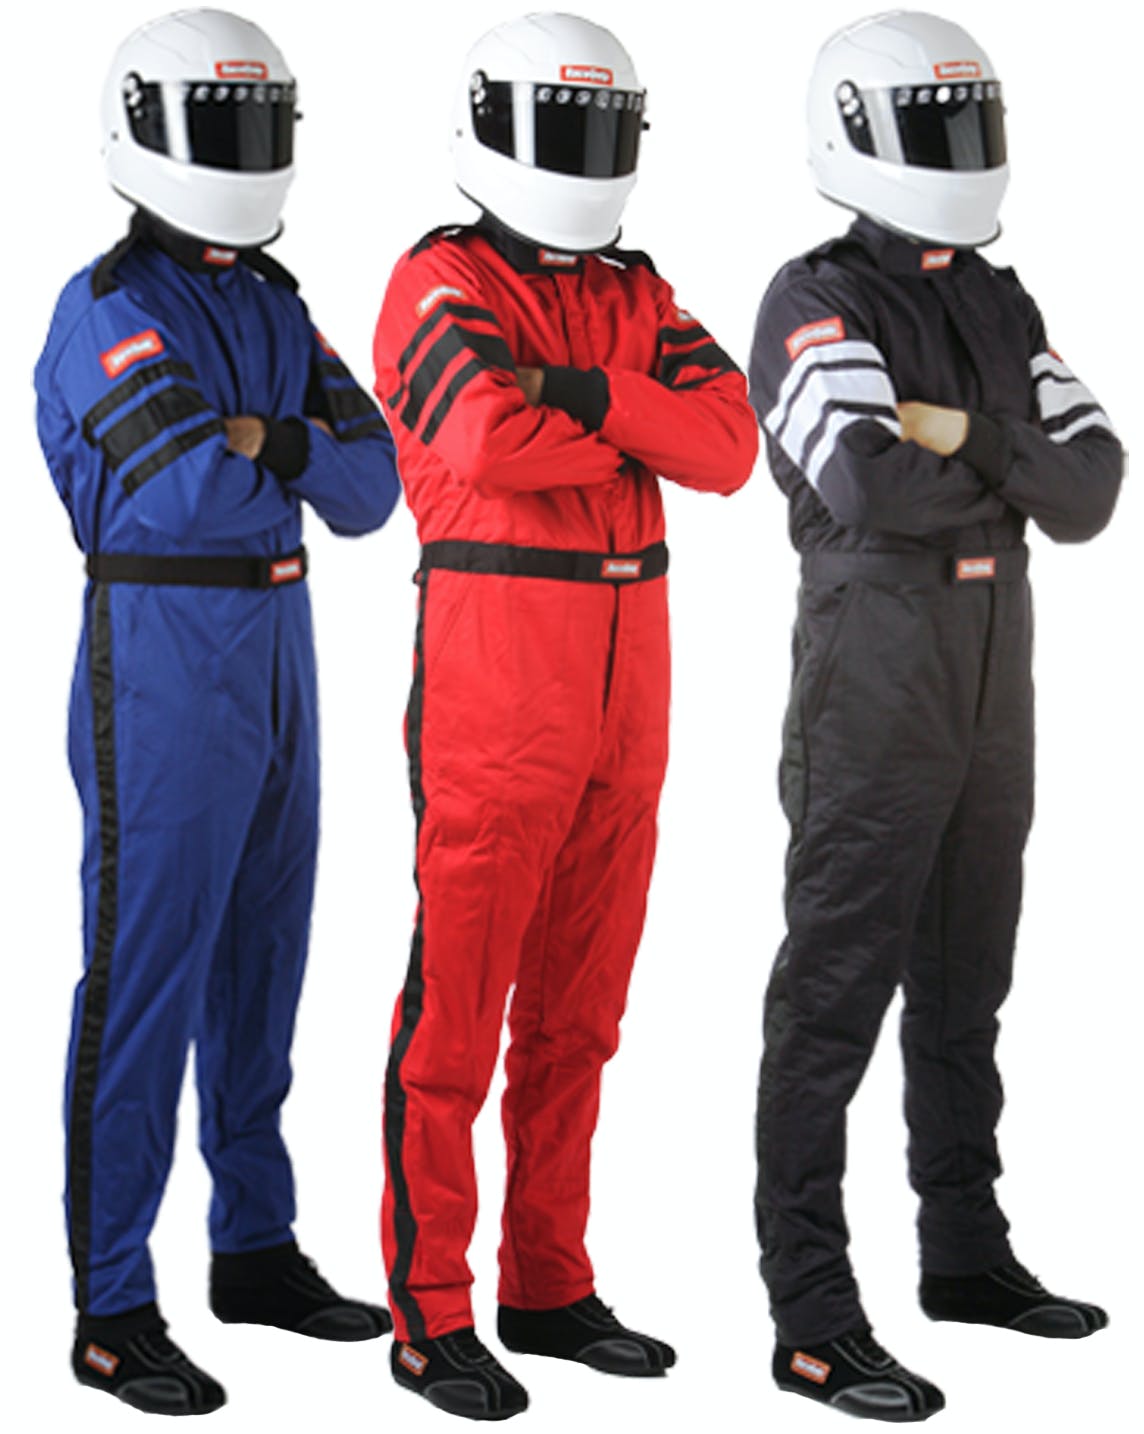 RaceQuip 120004 SFI-5 Pyrovatex One-Piece Multi-Layer Racing Fire Suit (Black, Medium-Tall)